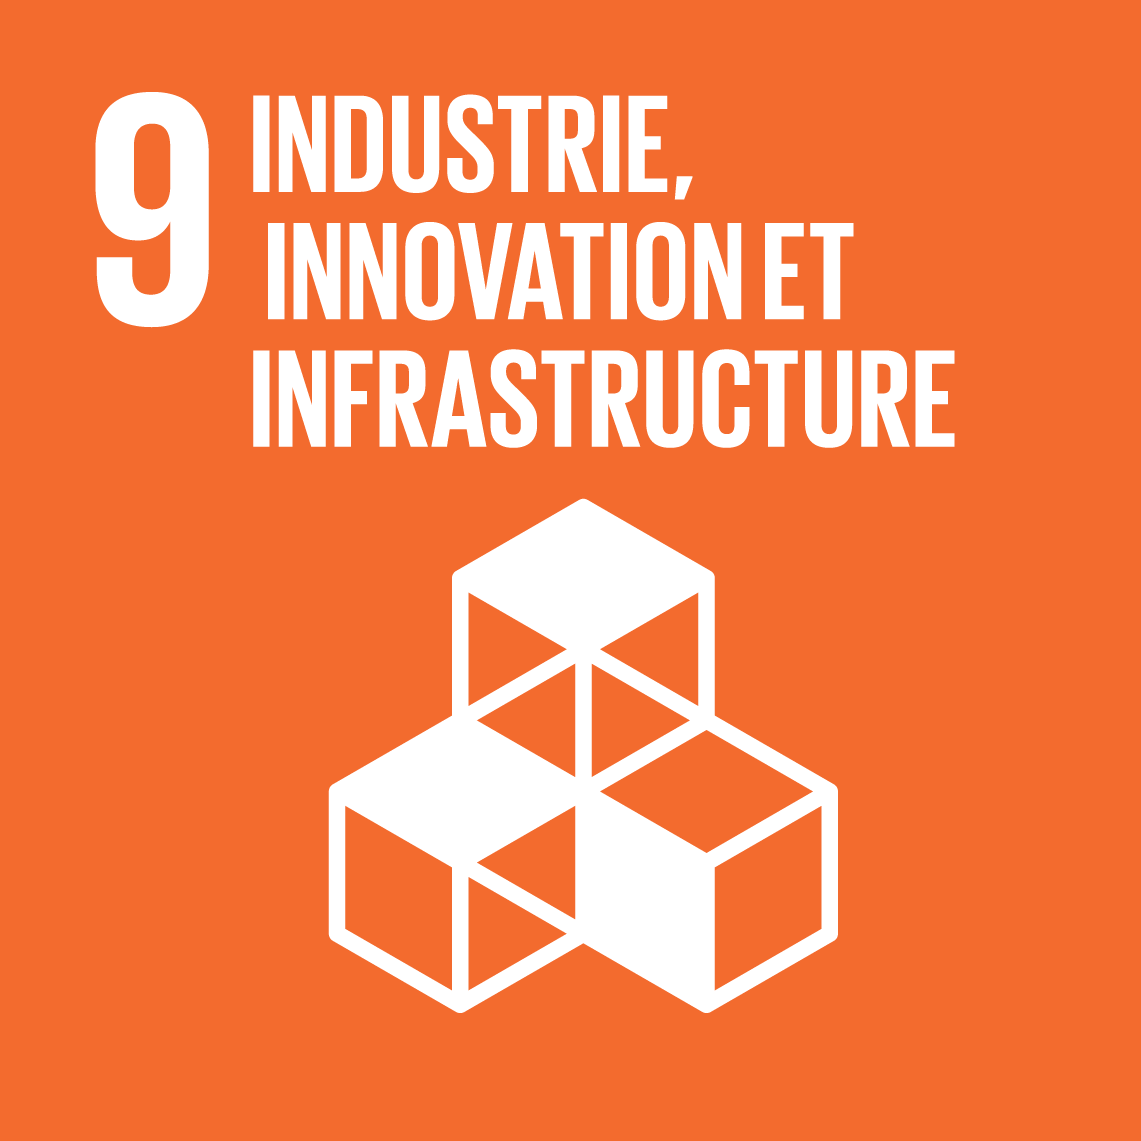 9 Industrie, innovation et infrastructure